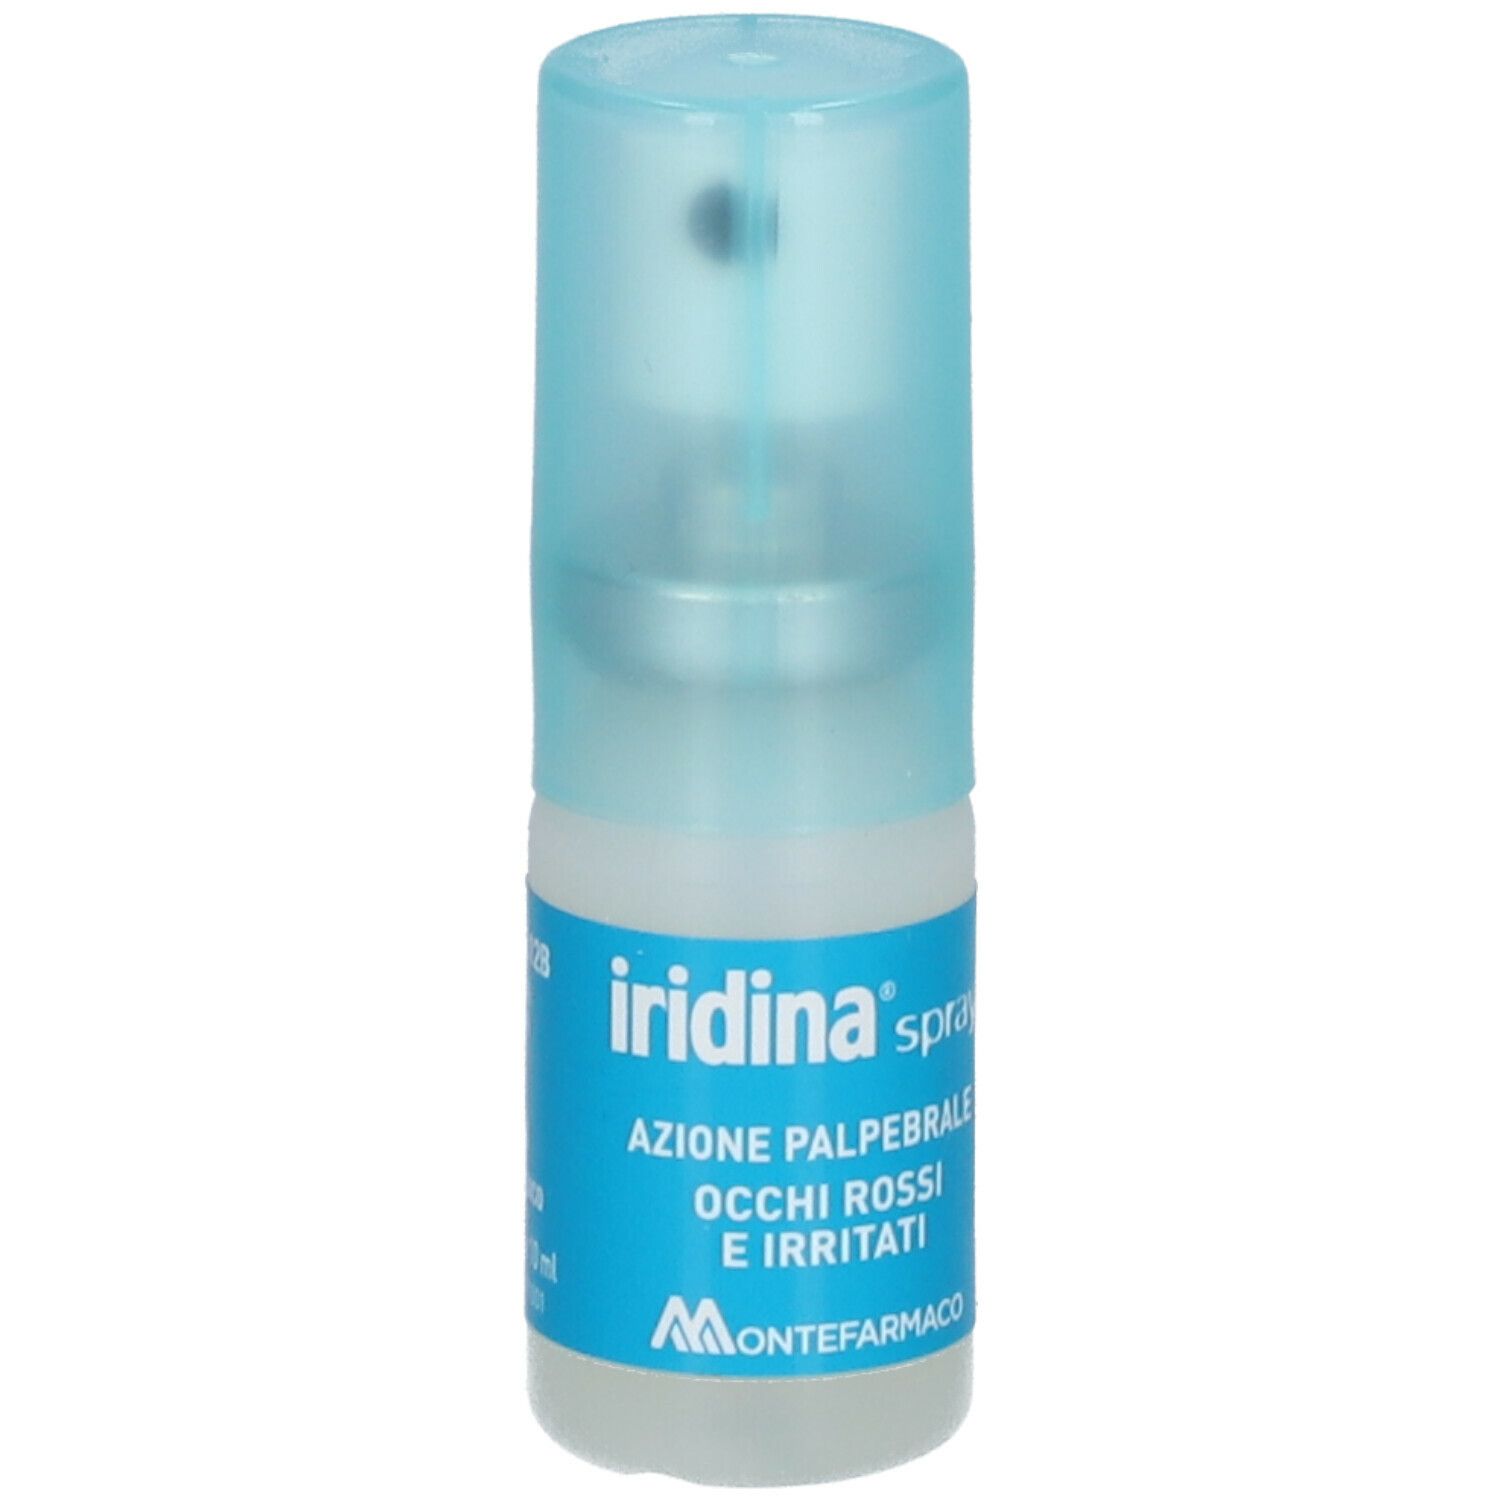 iridina® Spray Azione Palpebrale Occhi Rossi e Irritati